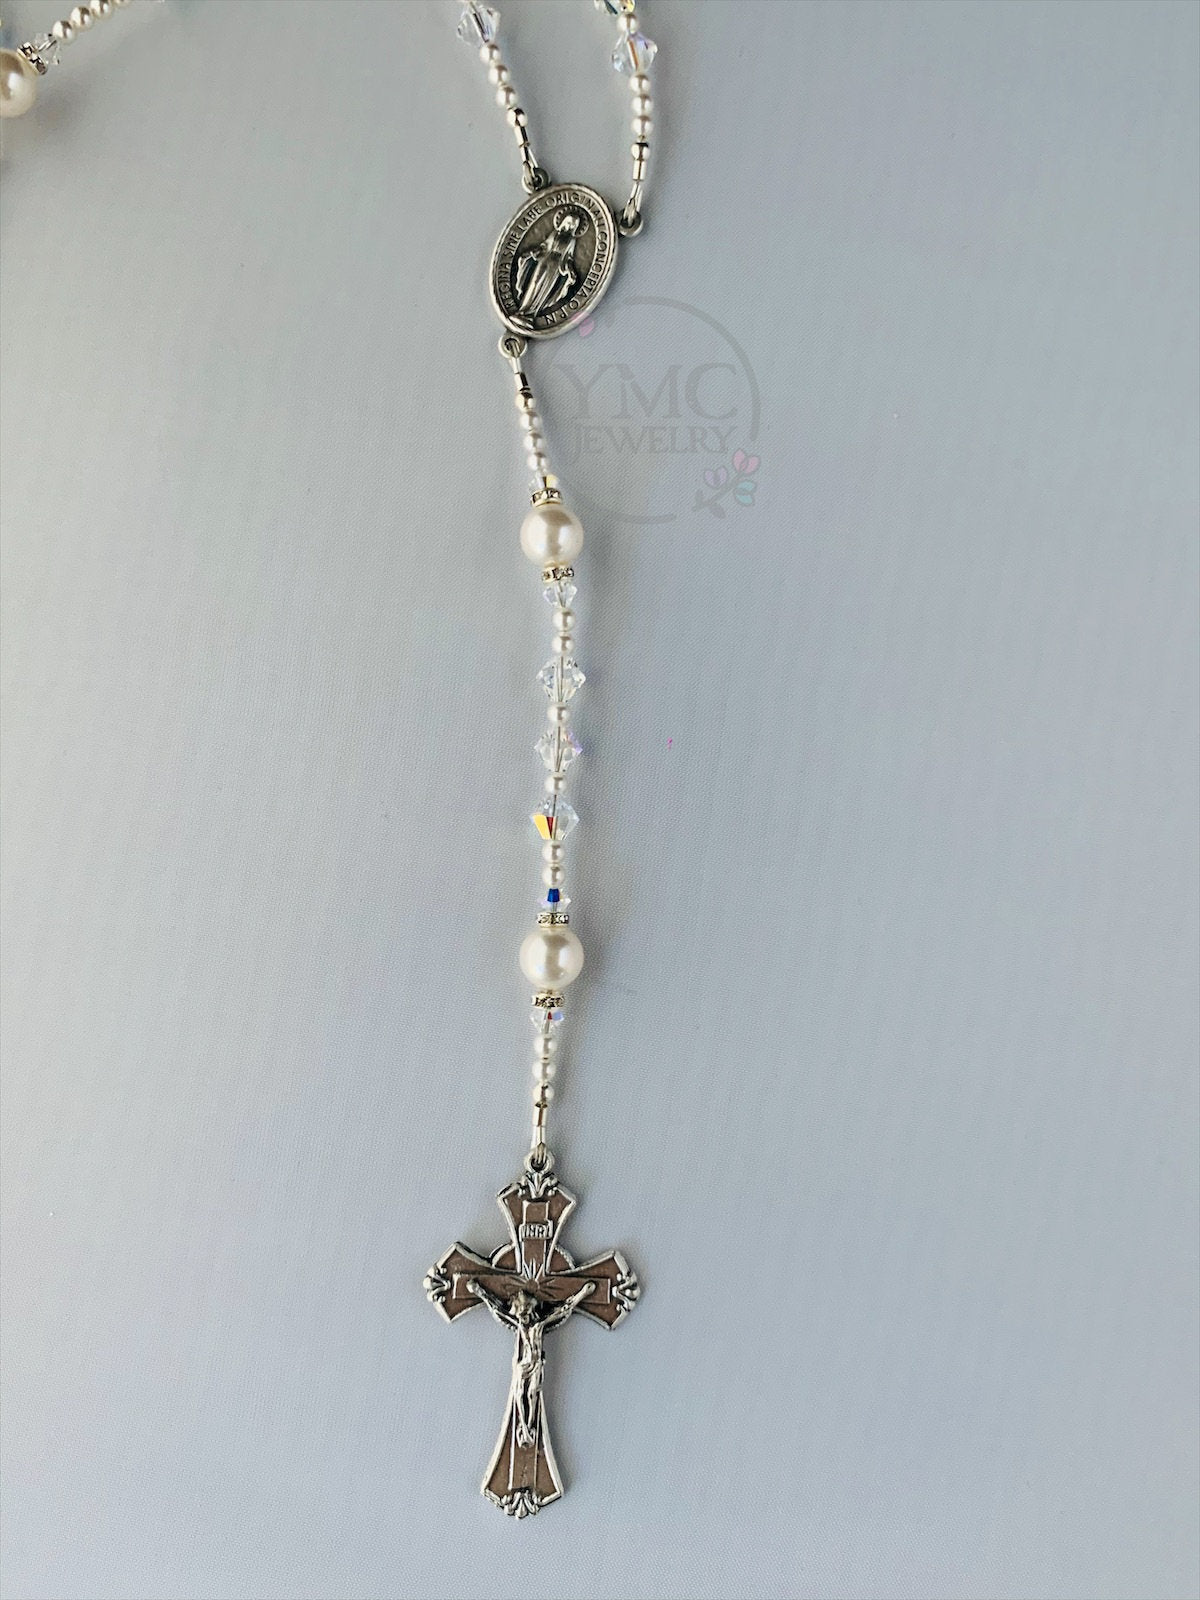 Catholic Swarovski Bride Pearl Rosary,Five Decade Pearl Rosary,Confirmation Rosary,Wedding Bride Bridal Pearl Rosary,First Communion Rosary